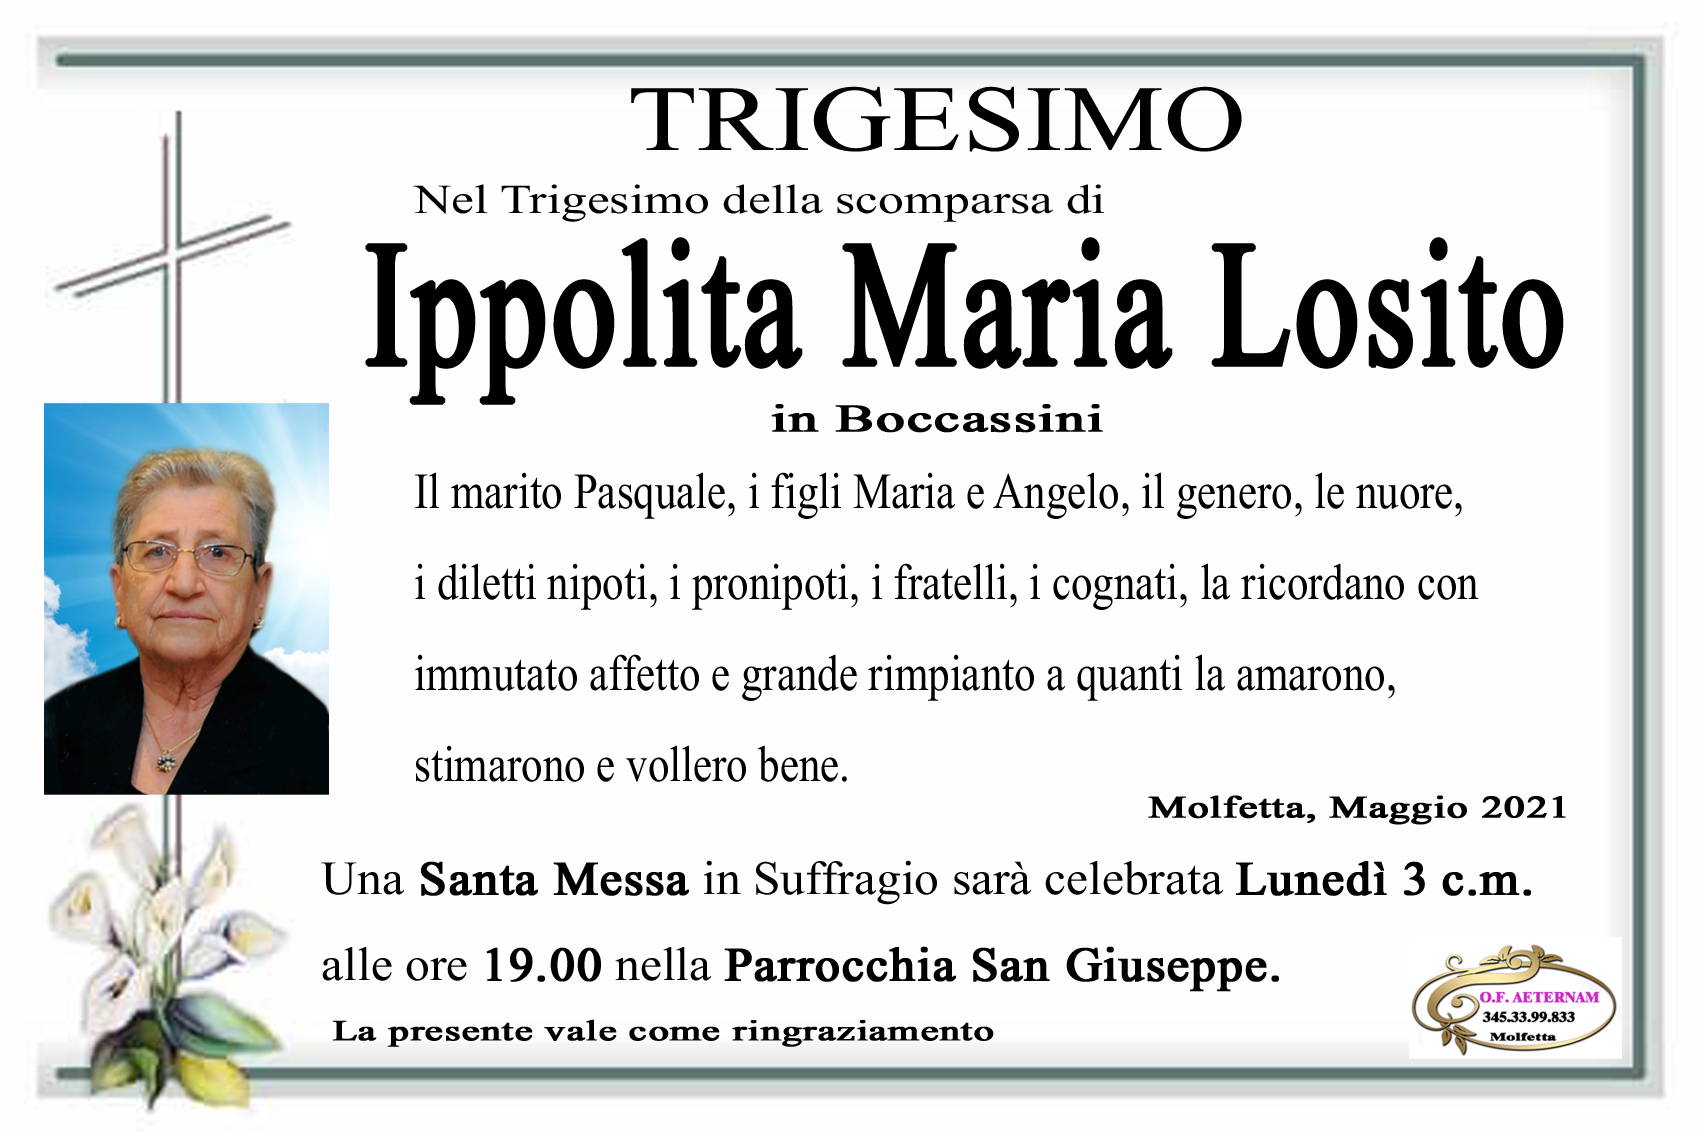 Ippolita Maria Losito